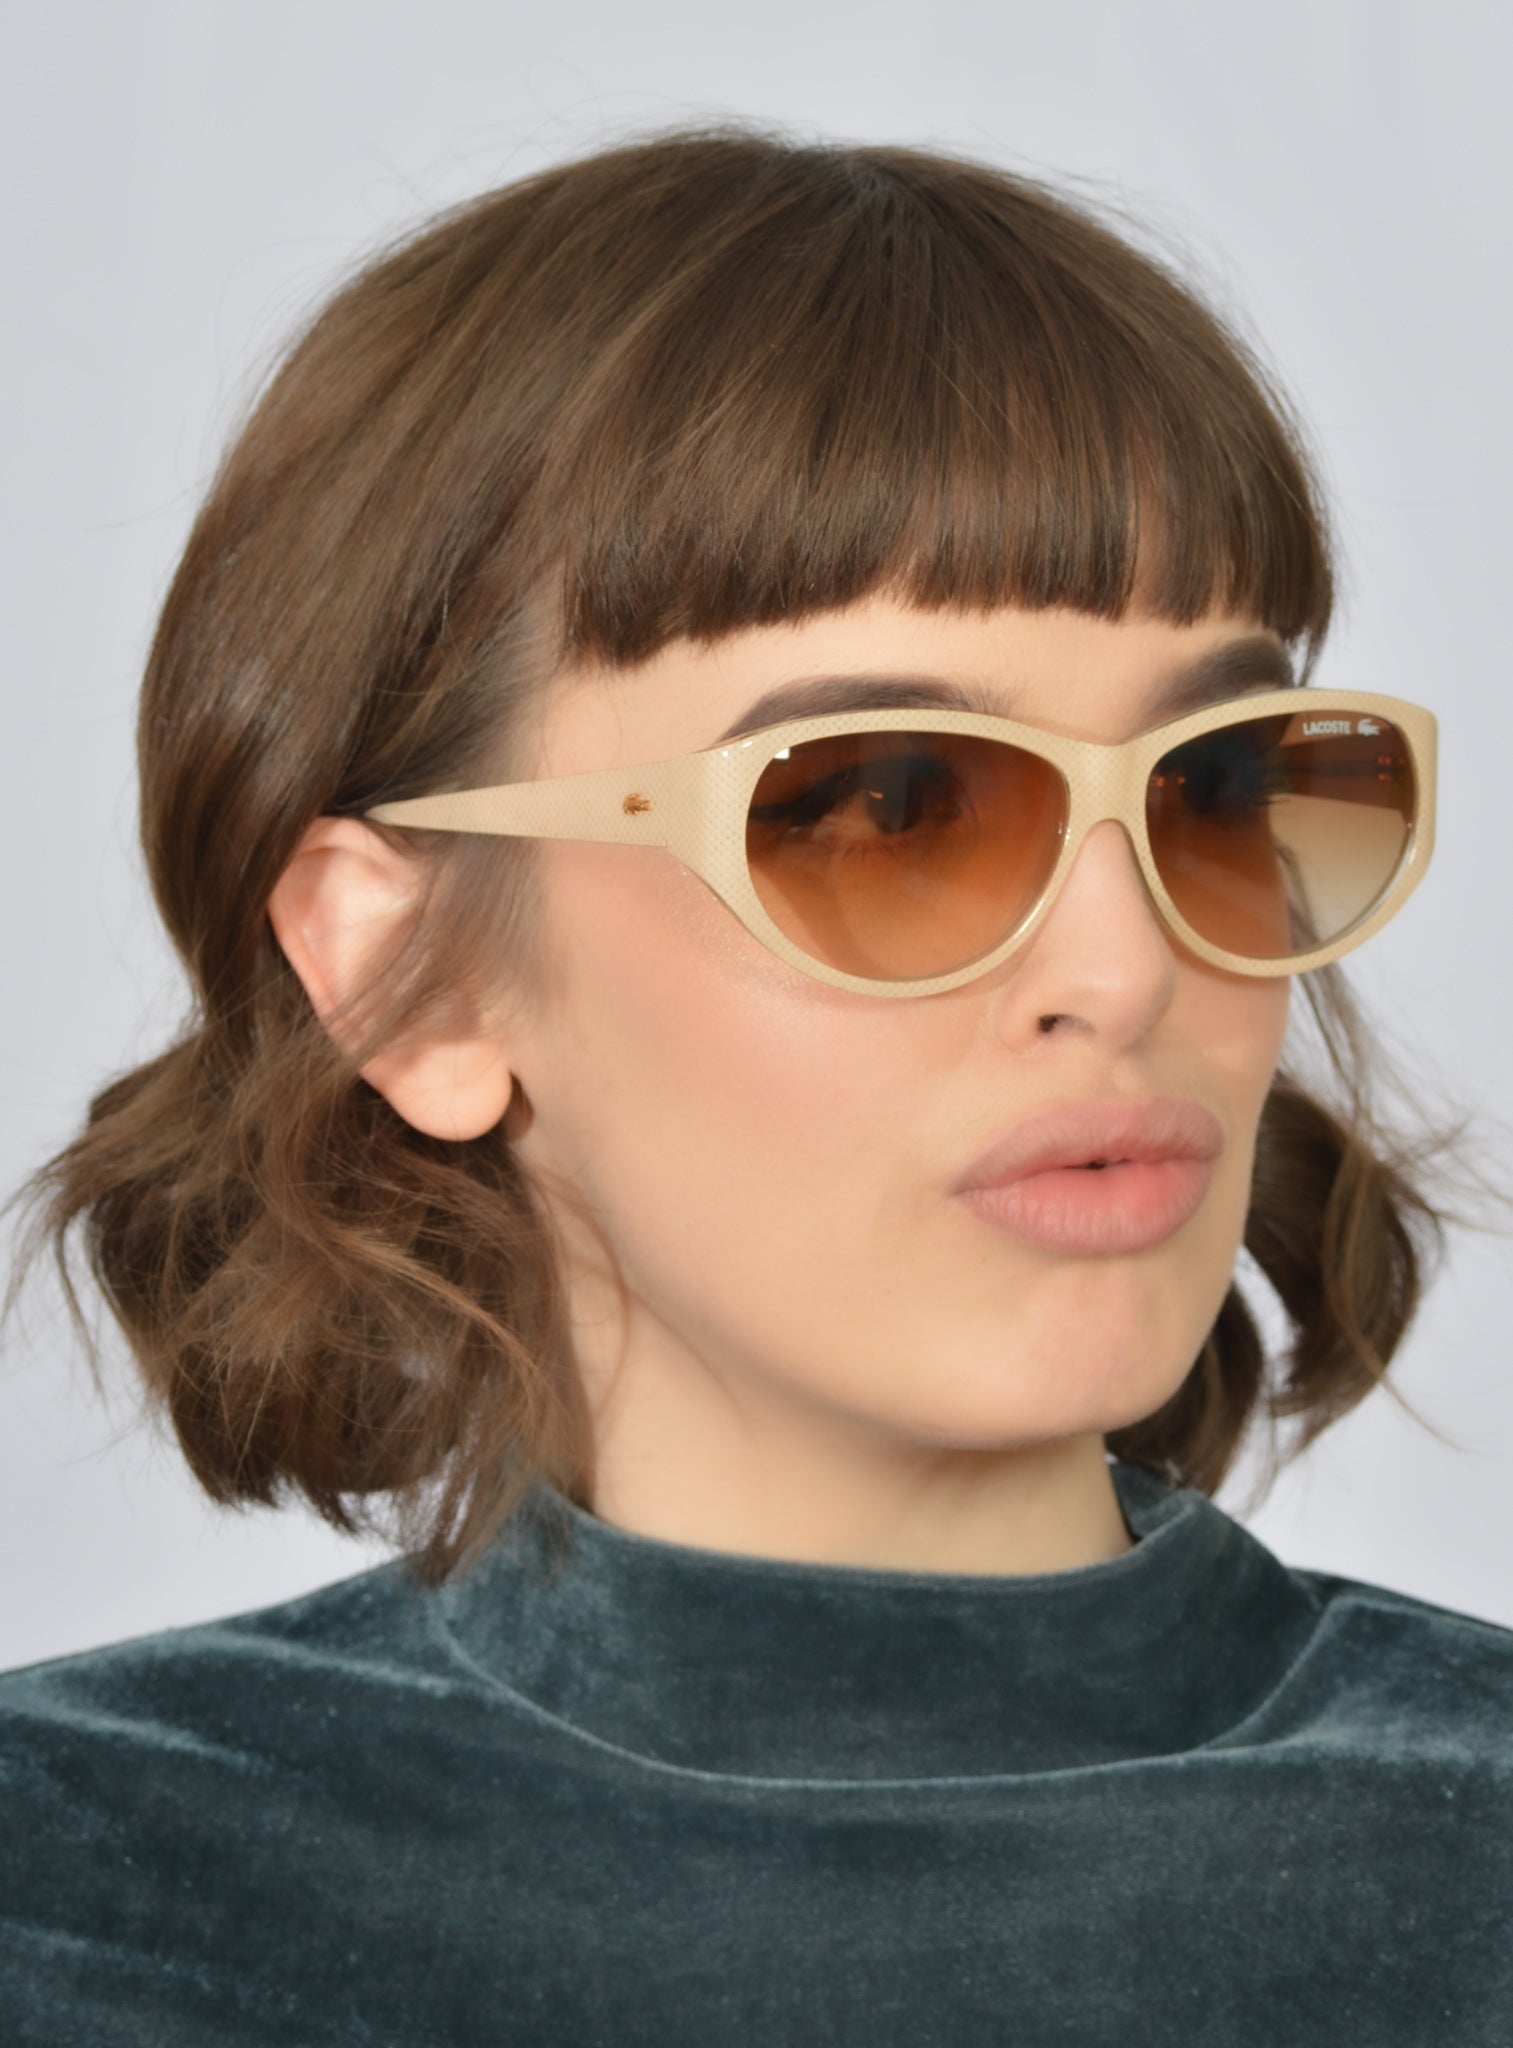 Lacoste 120 vintage sunglasses in colour 0136. Vintage sunglasses. Ladies sunglasses. Sustainable sunglasses. Buy designer sunglasses online.